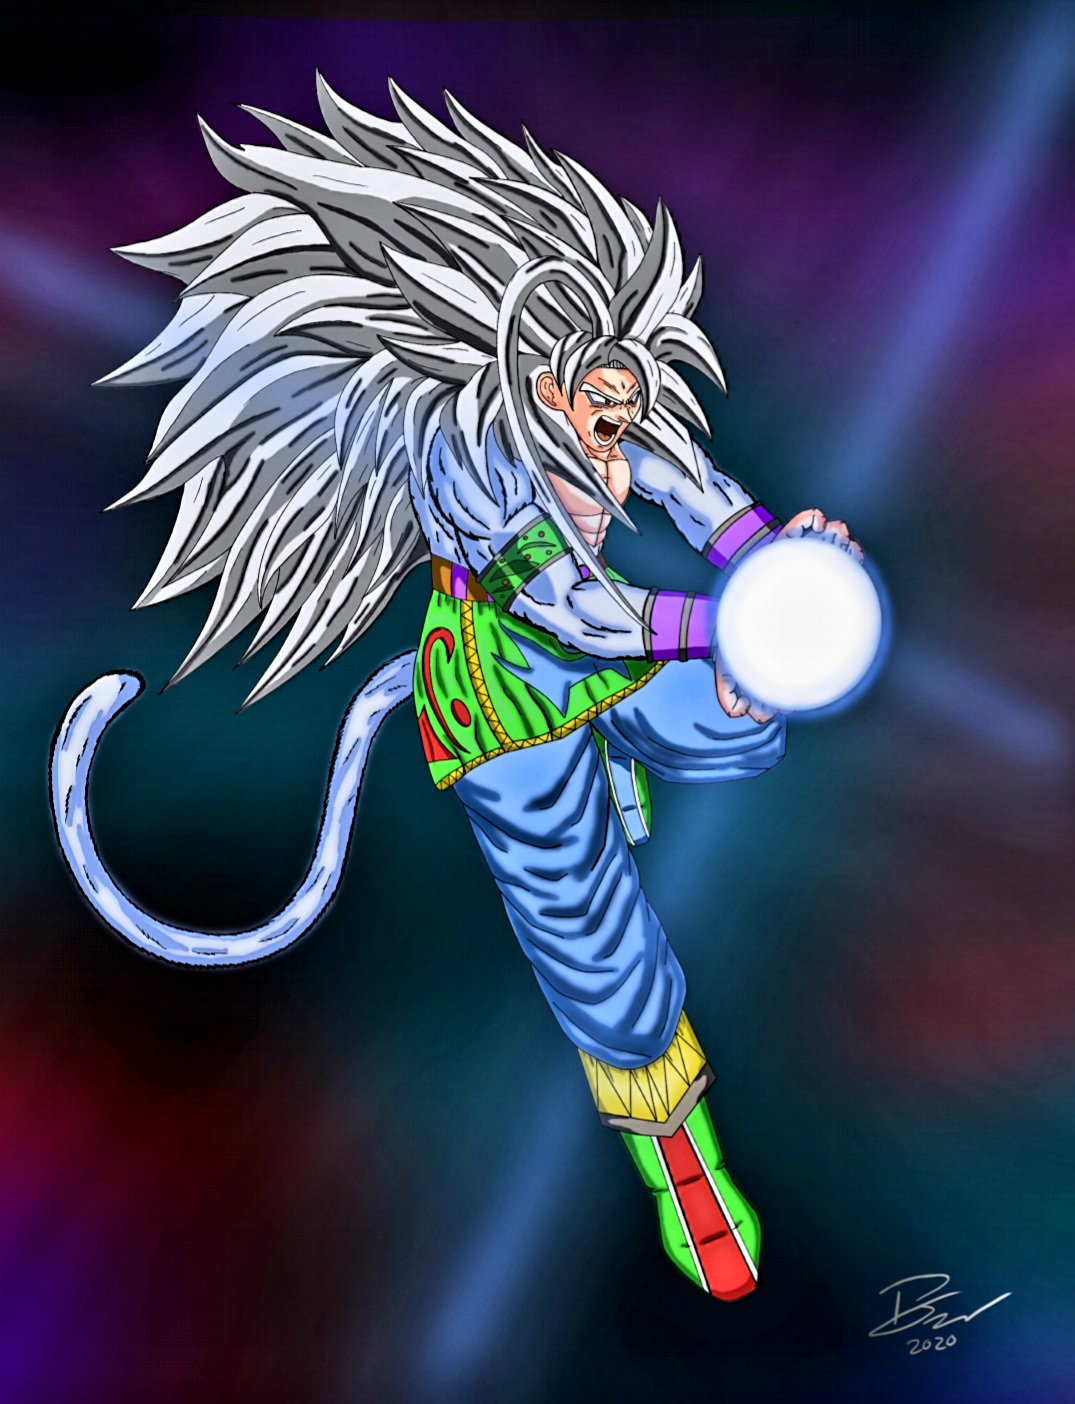 Super Saiyan 5 Goku by BrandonKuhn24469 on DeviantArt